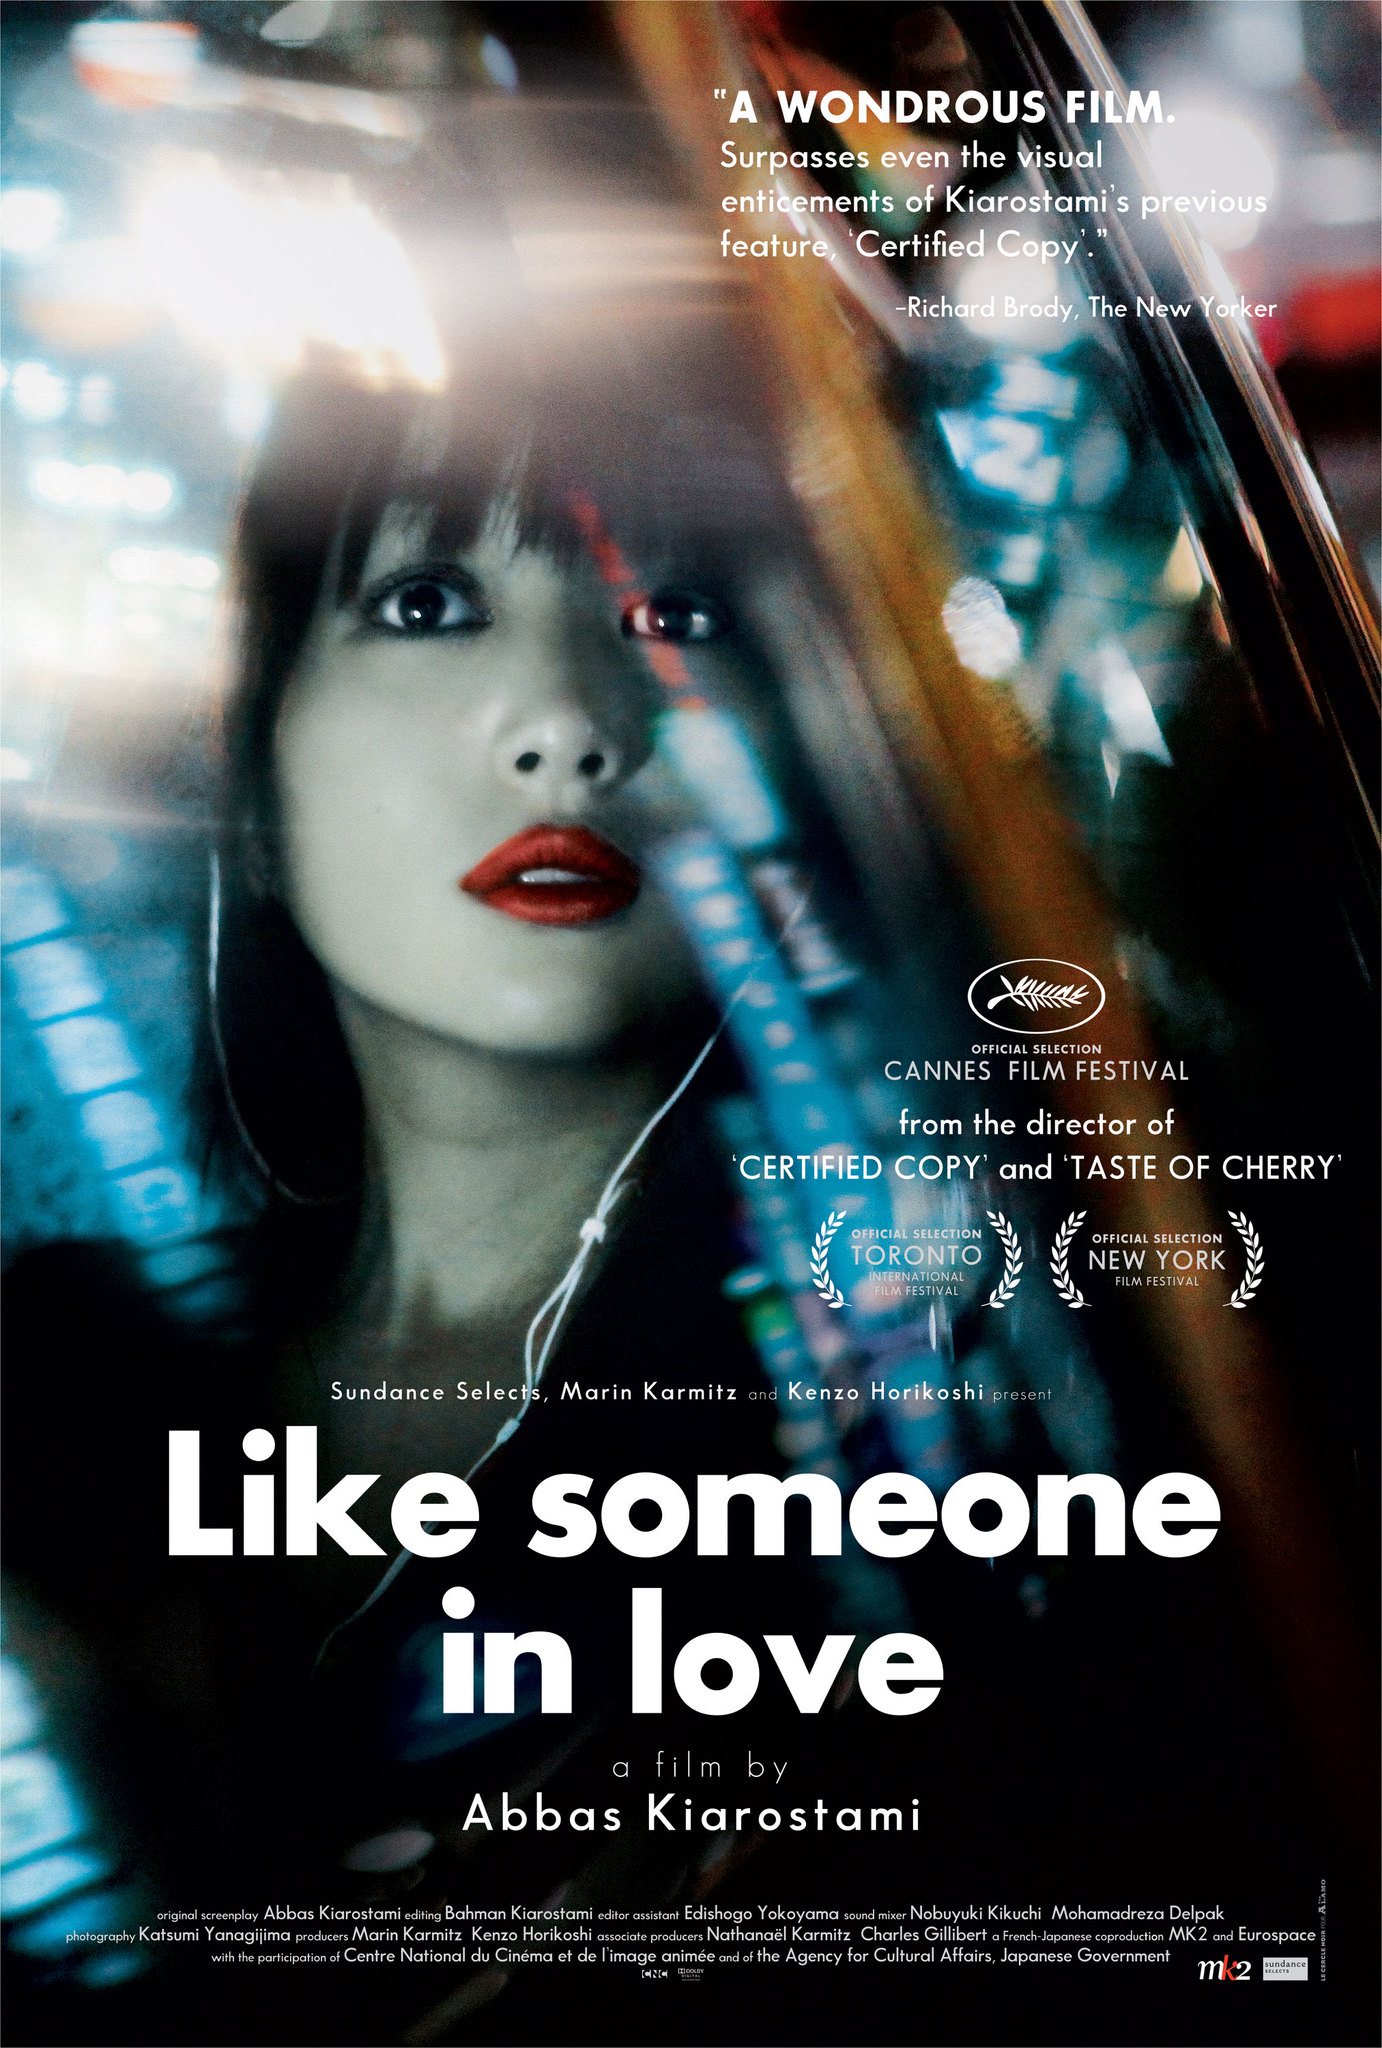 Like Someone in Love (2012) คล้ายคนมีความรัก